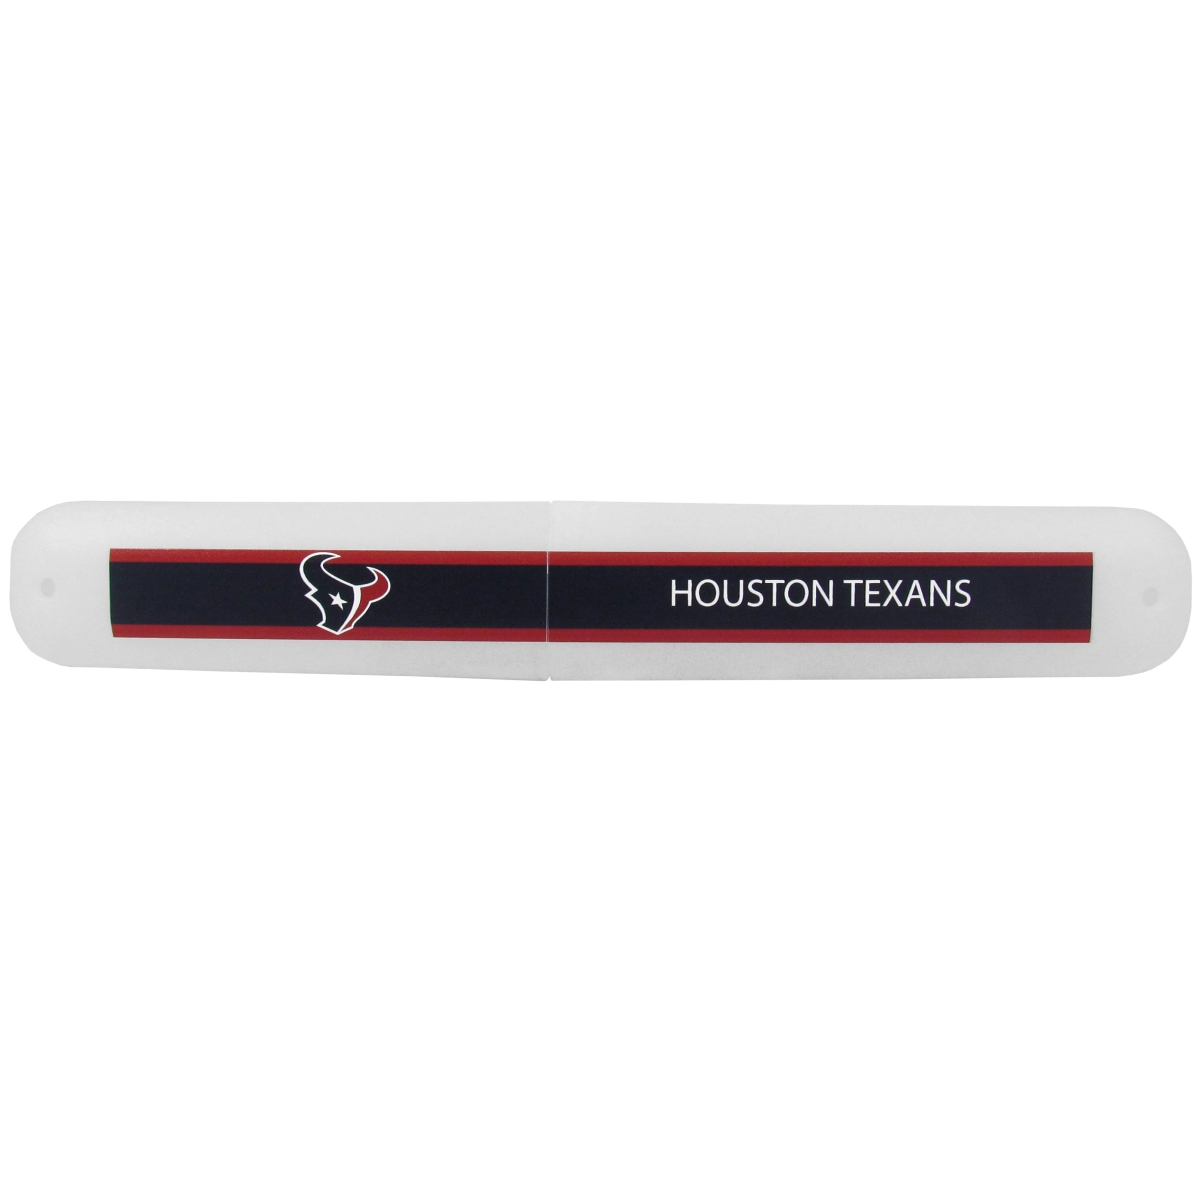 Picture of Siskiyou FTBC190 Unisex NFL Houston Texans Travel Toothbrush Case - One Size